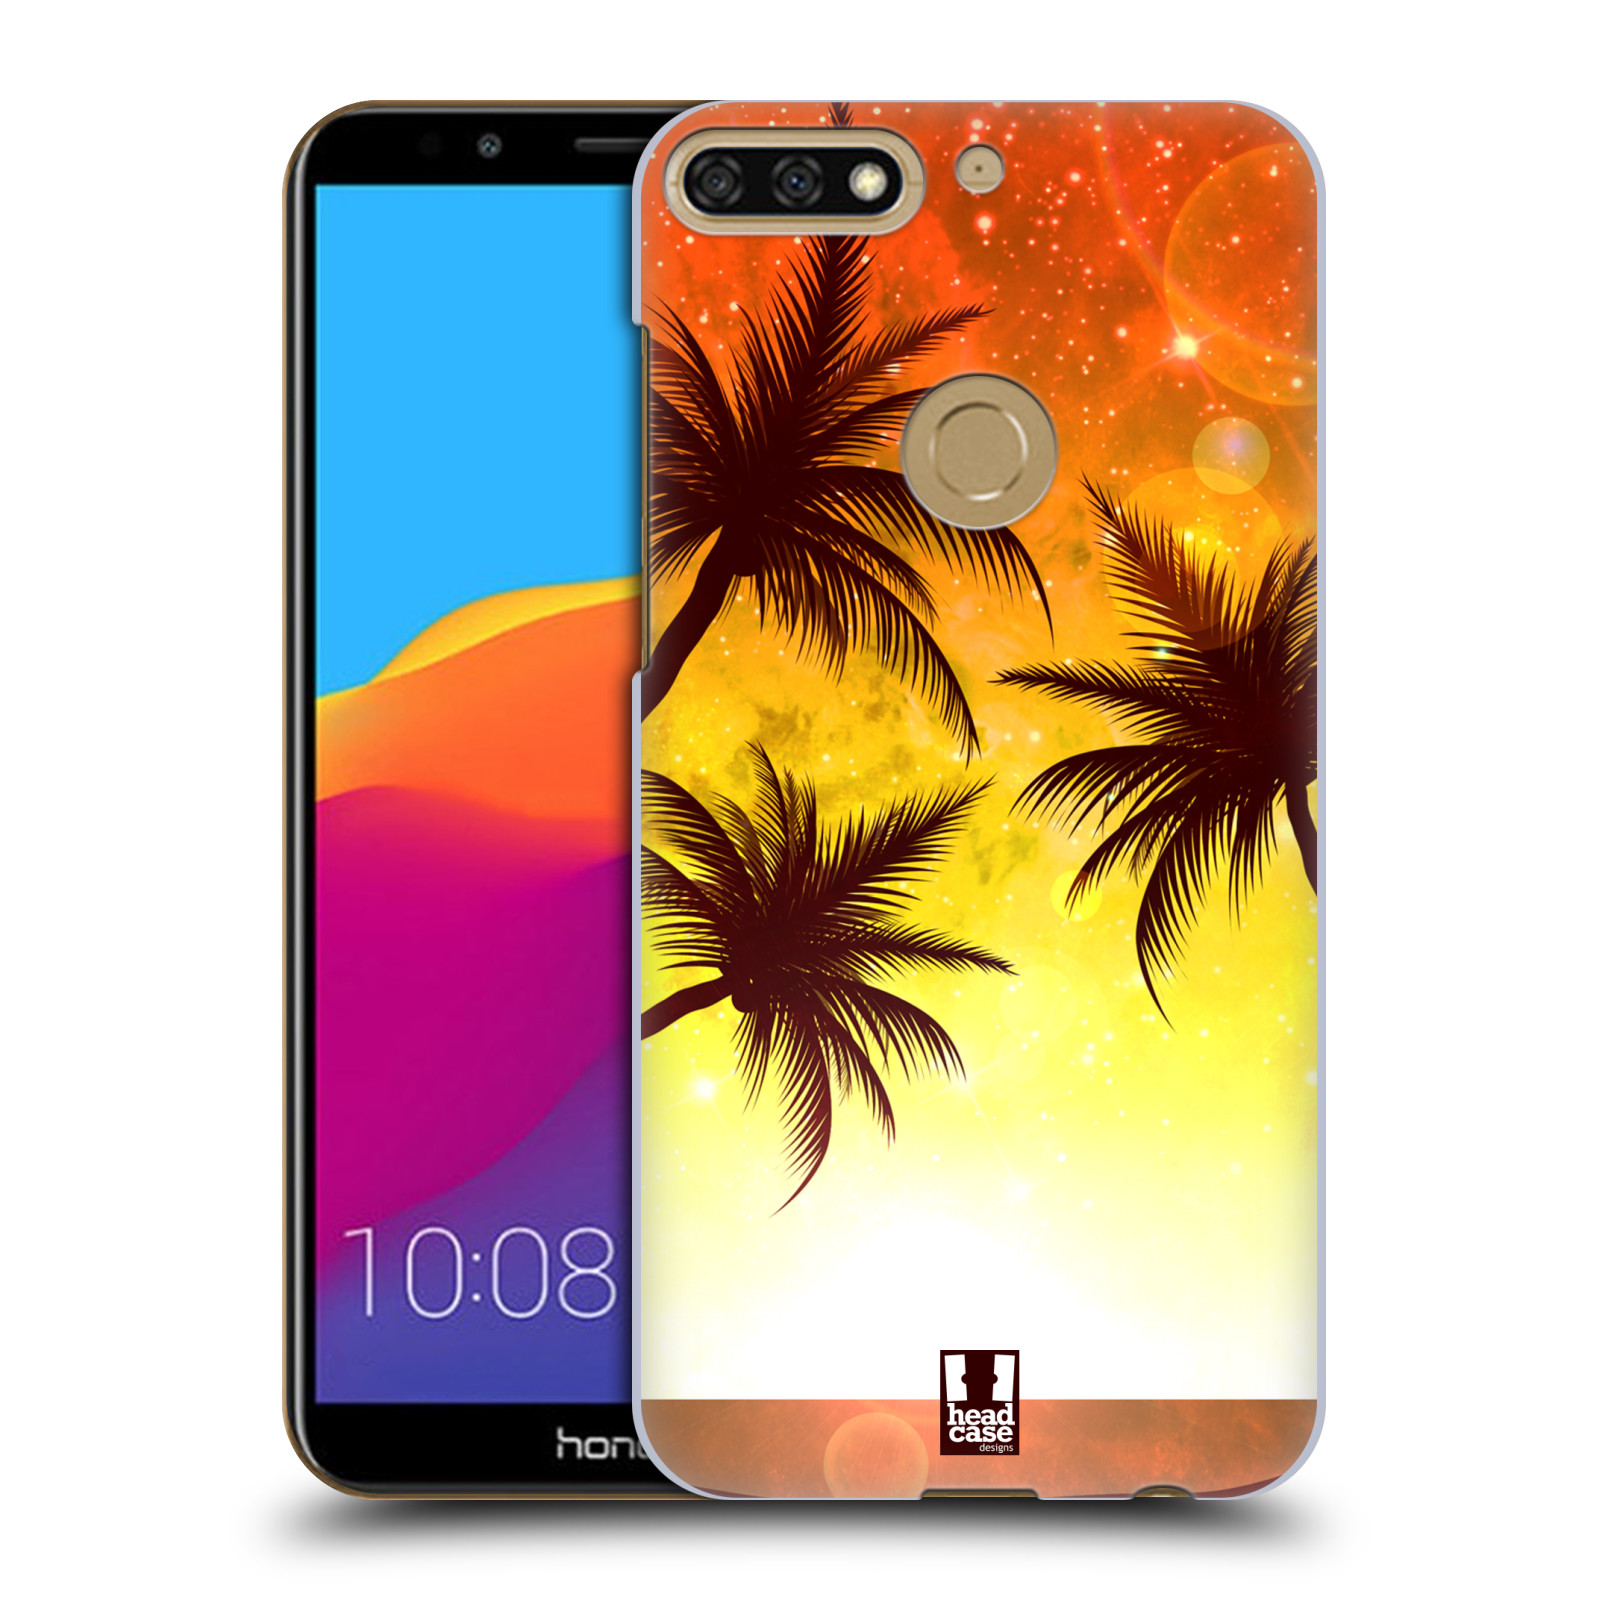 HEAD CASE plastový obal na mobil Honor 7c vzor Kreslený motiv silueta moře a palmy ORANŽOVÁ